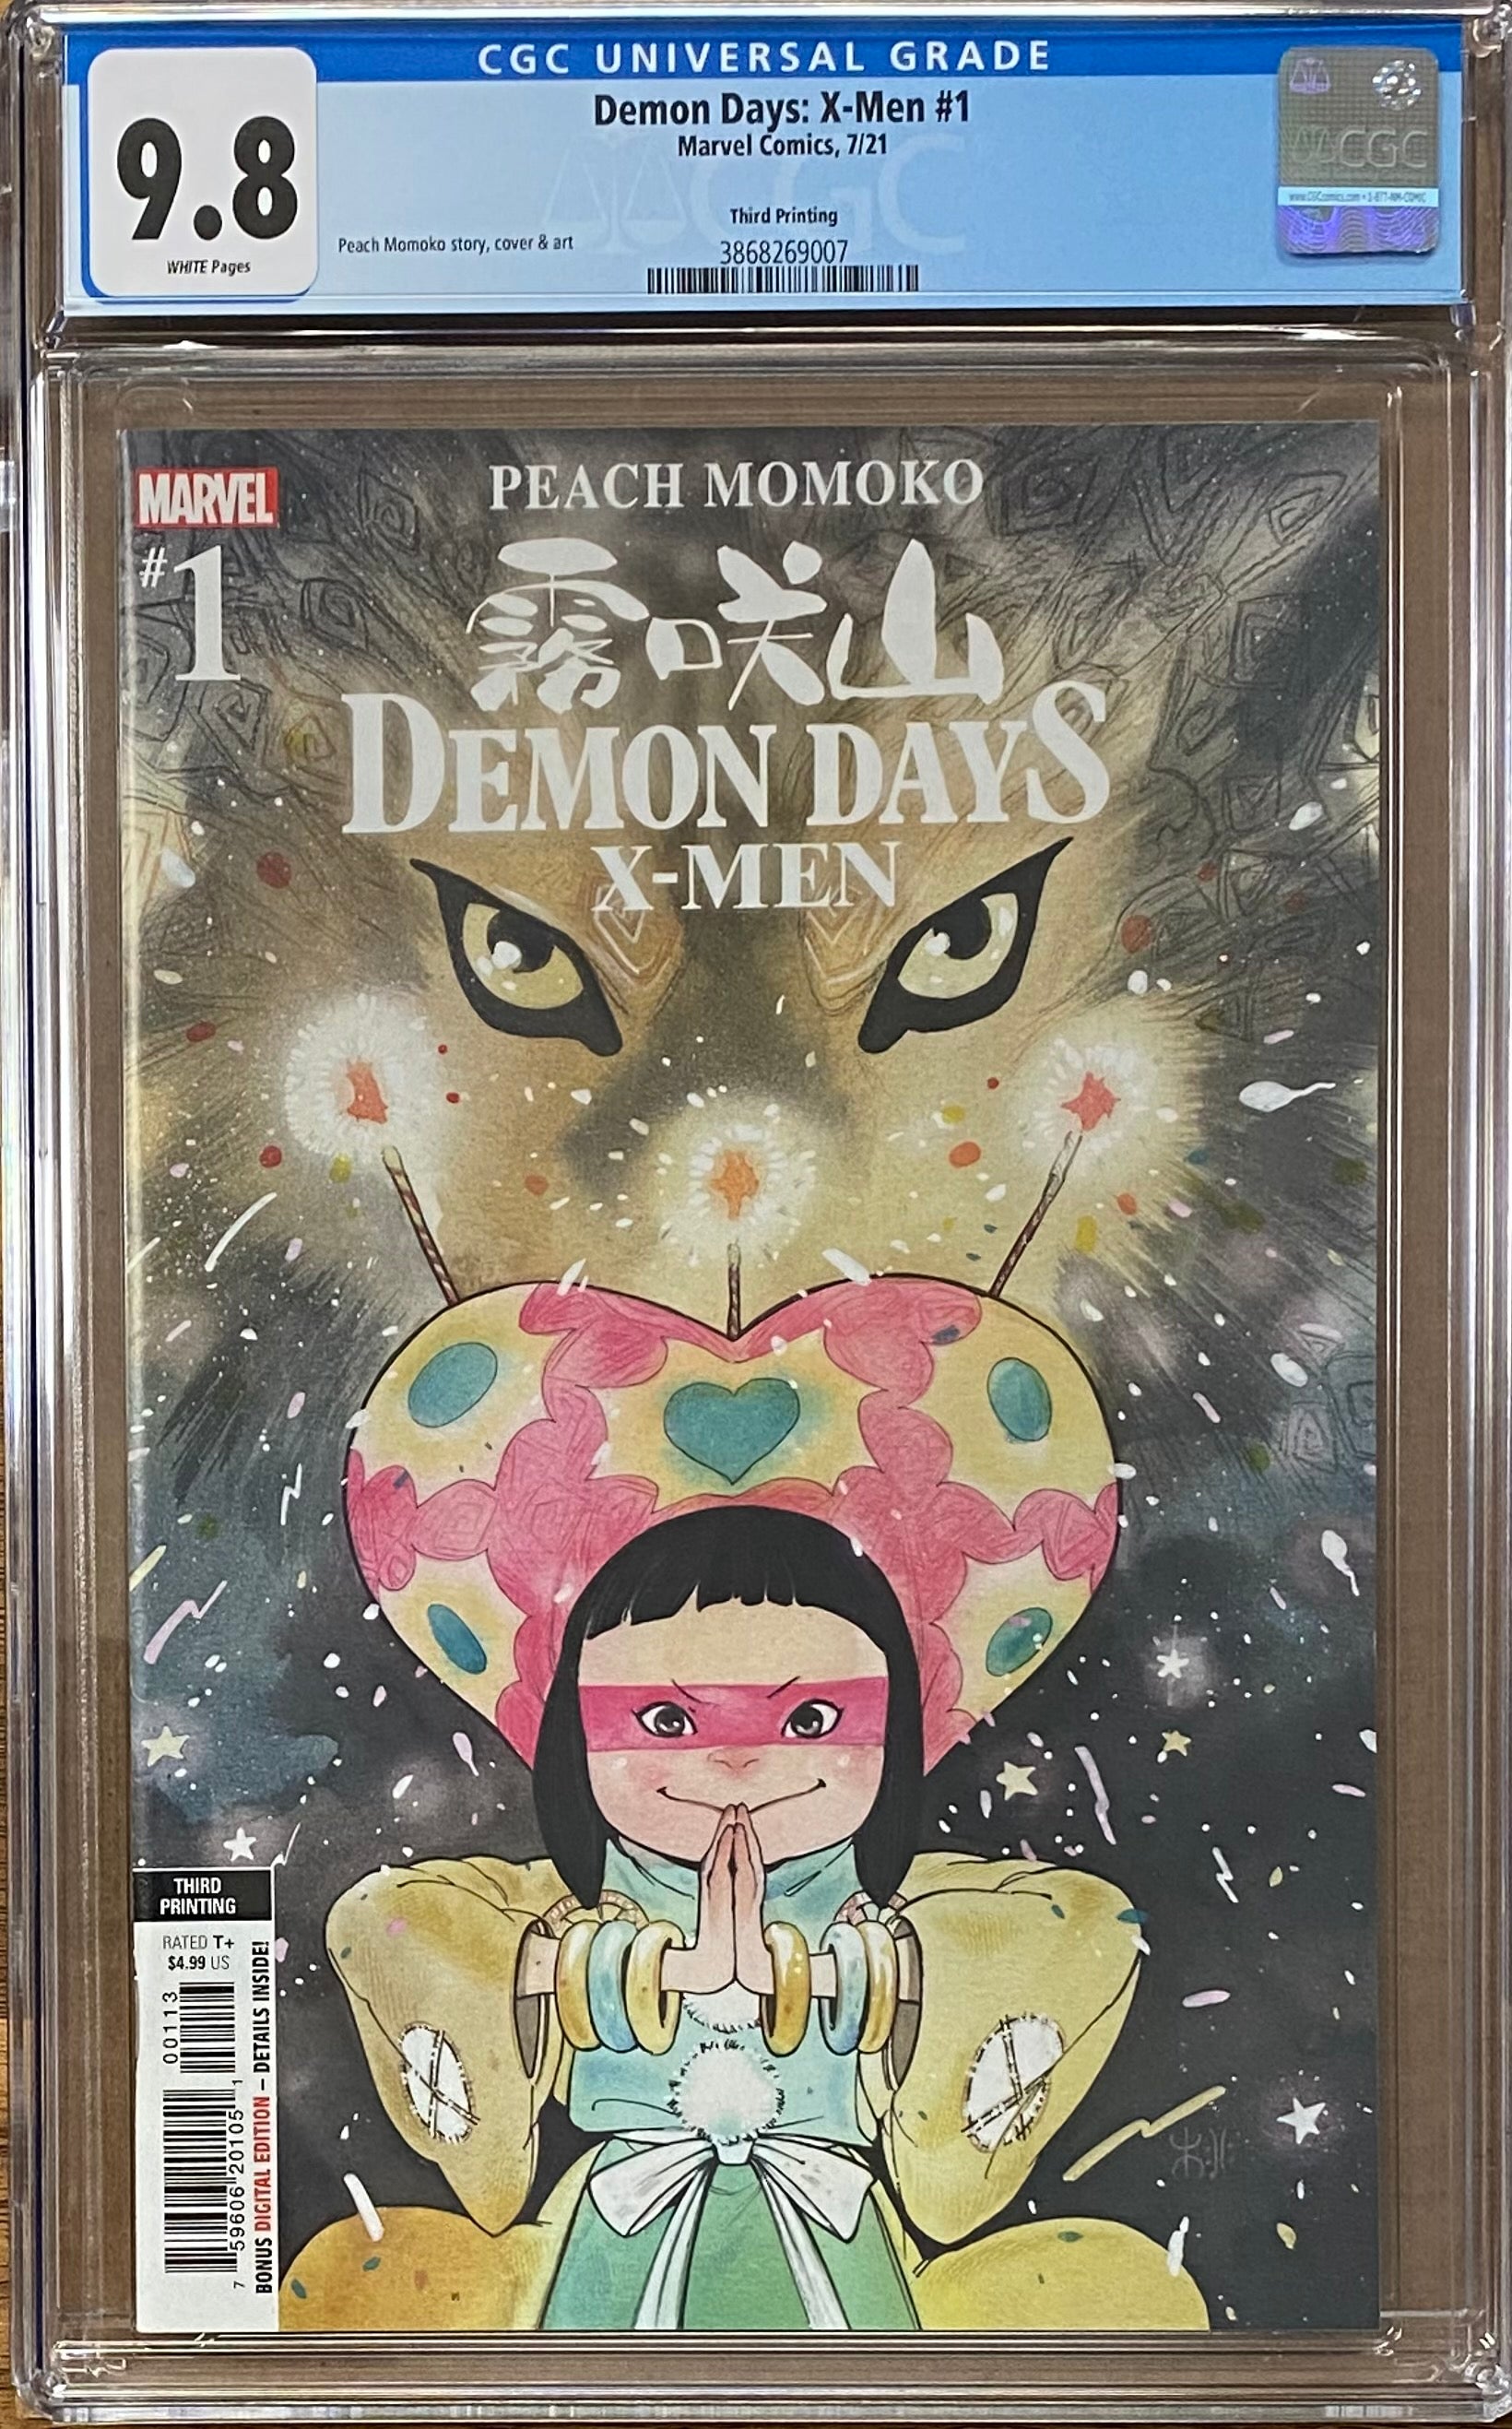 Demon Days: X-Men #1 Third Printing CGC 9.8